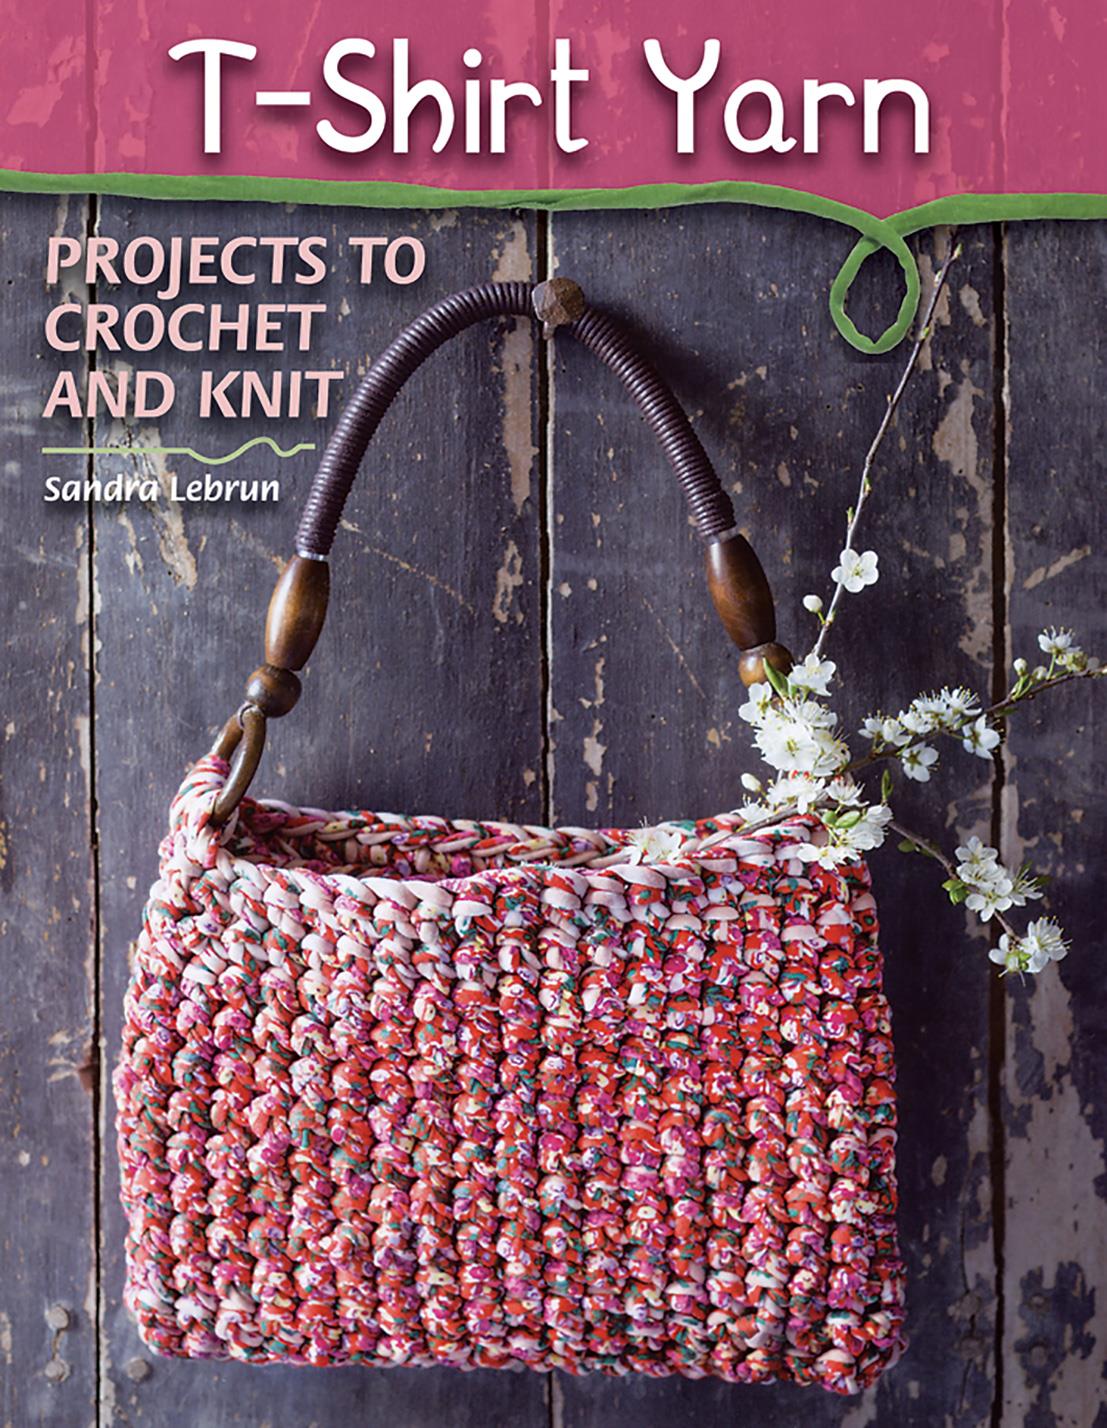 T-Shirt Yarn - Projects to Crochet & Knit - Pattern Book by Sandra Lebrun